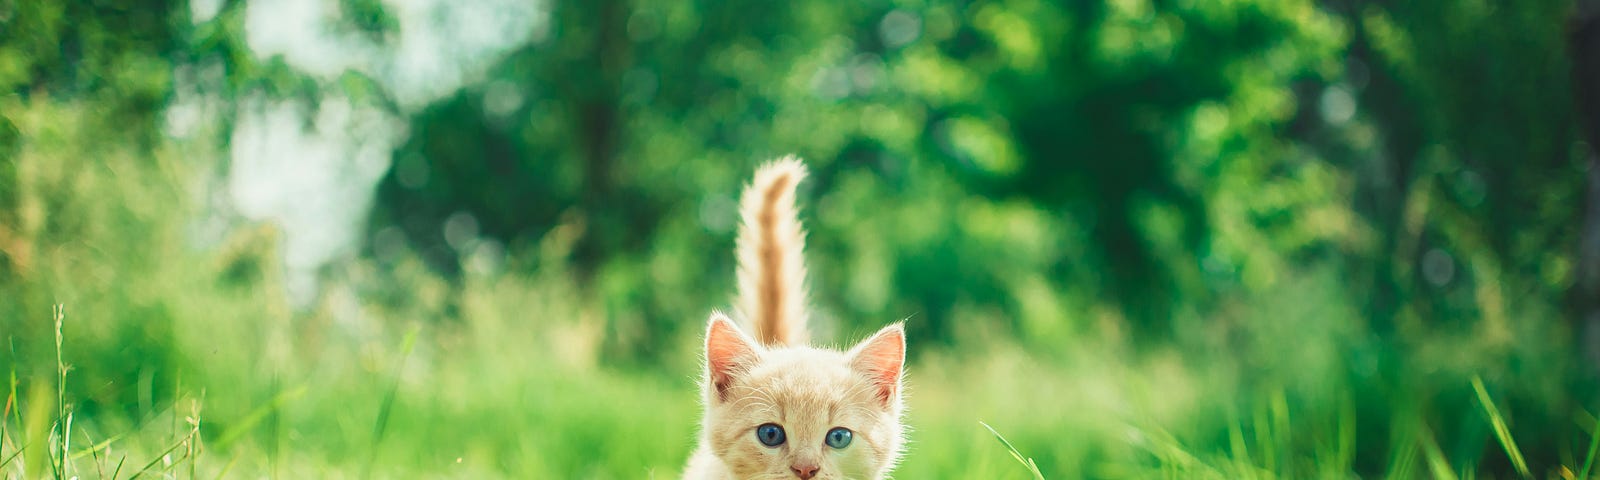 Orange tabby kitten walking on grass, facing the camera.